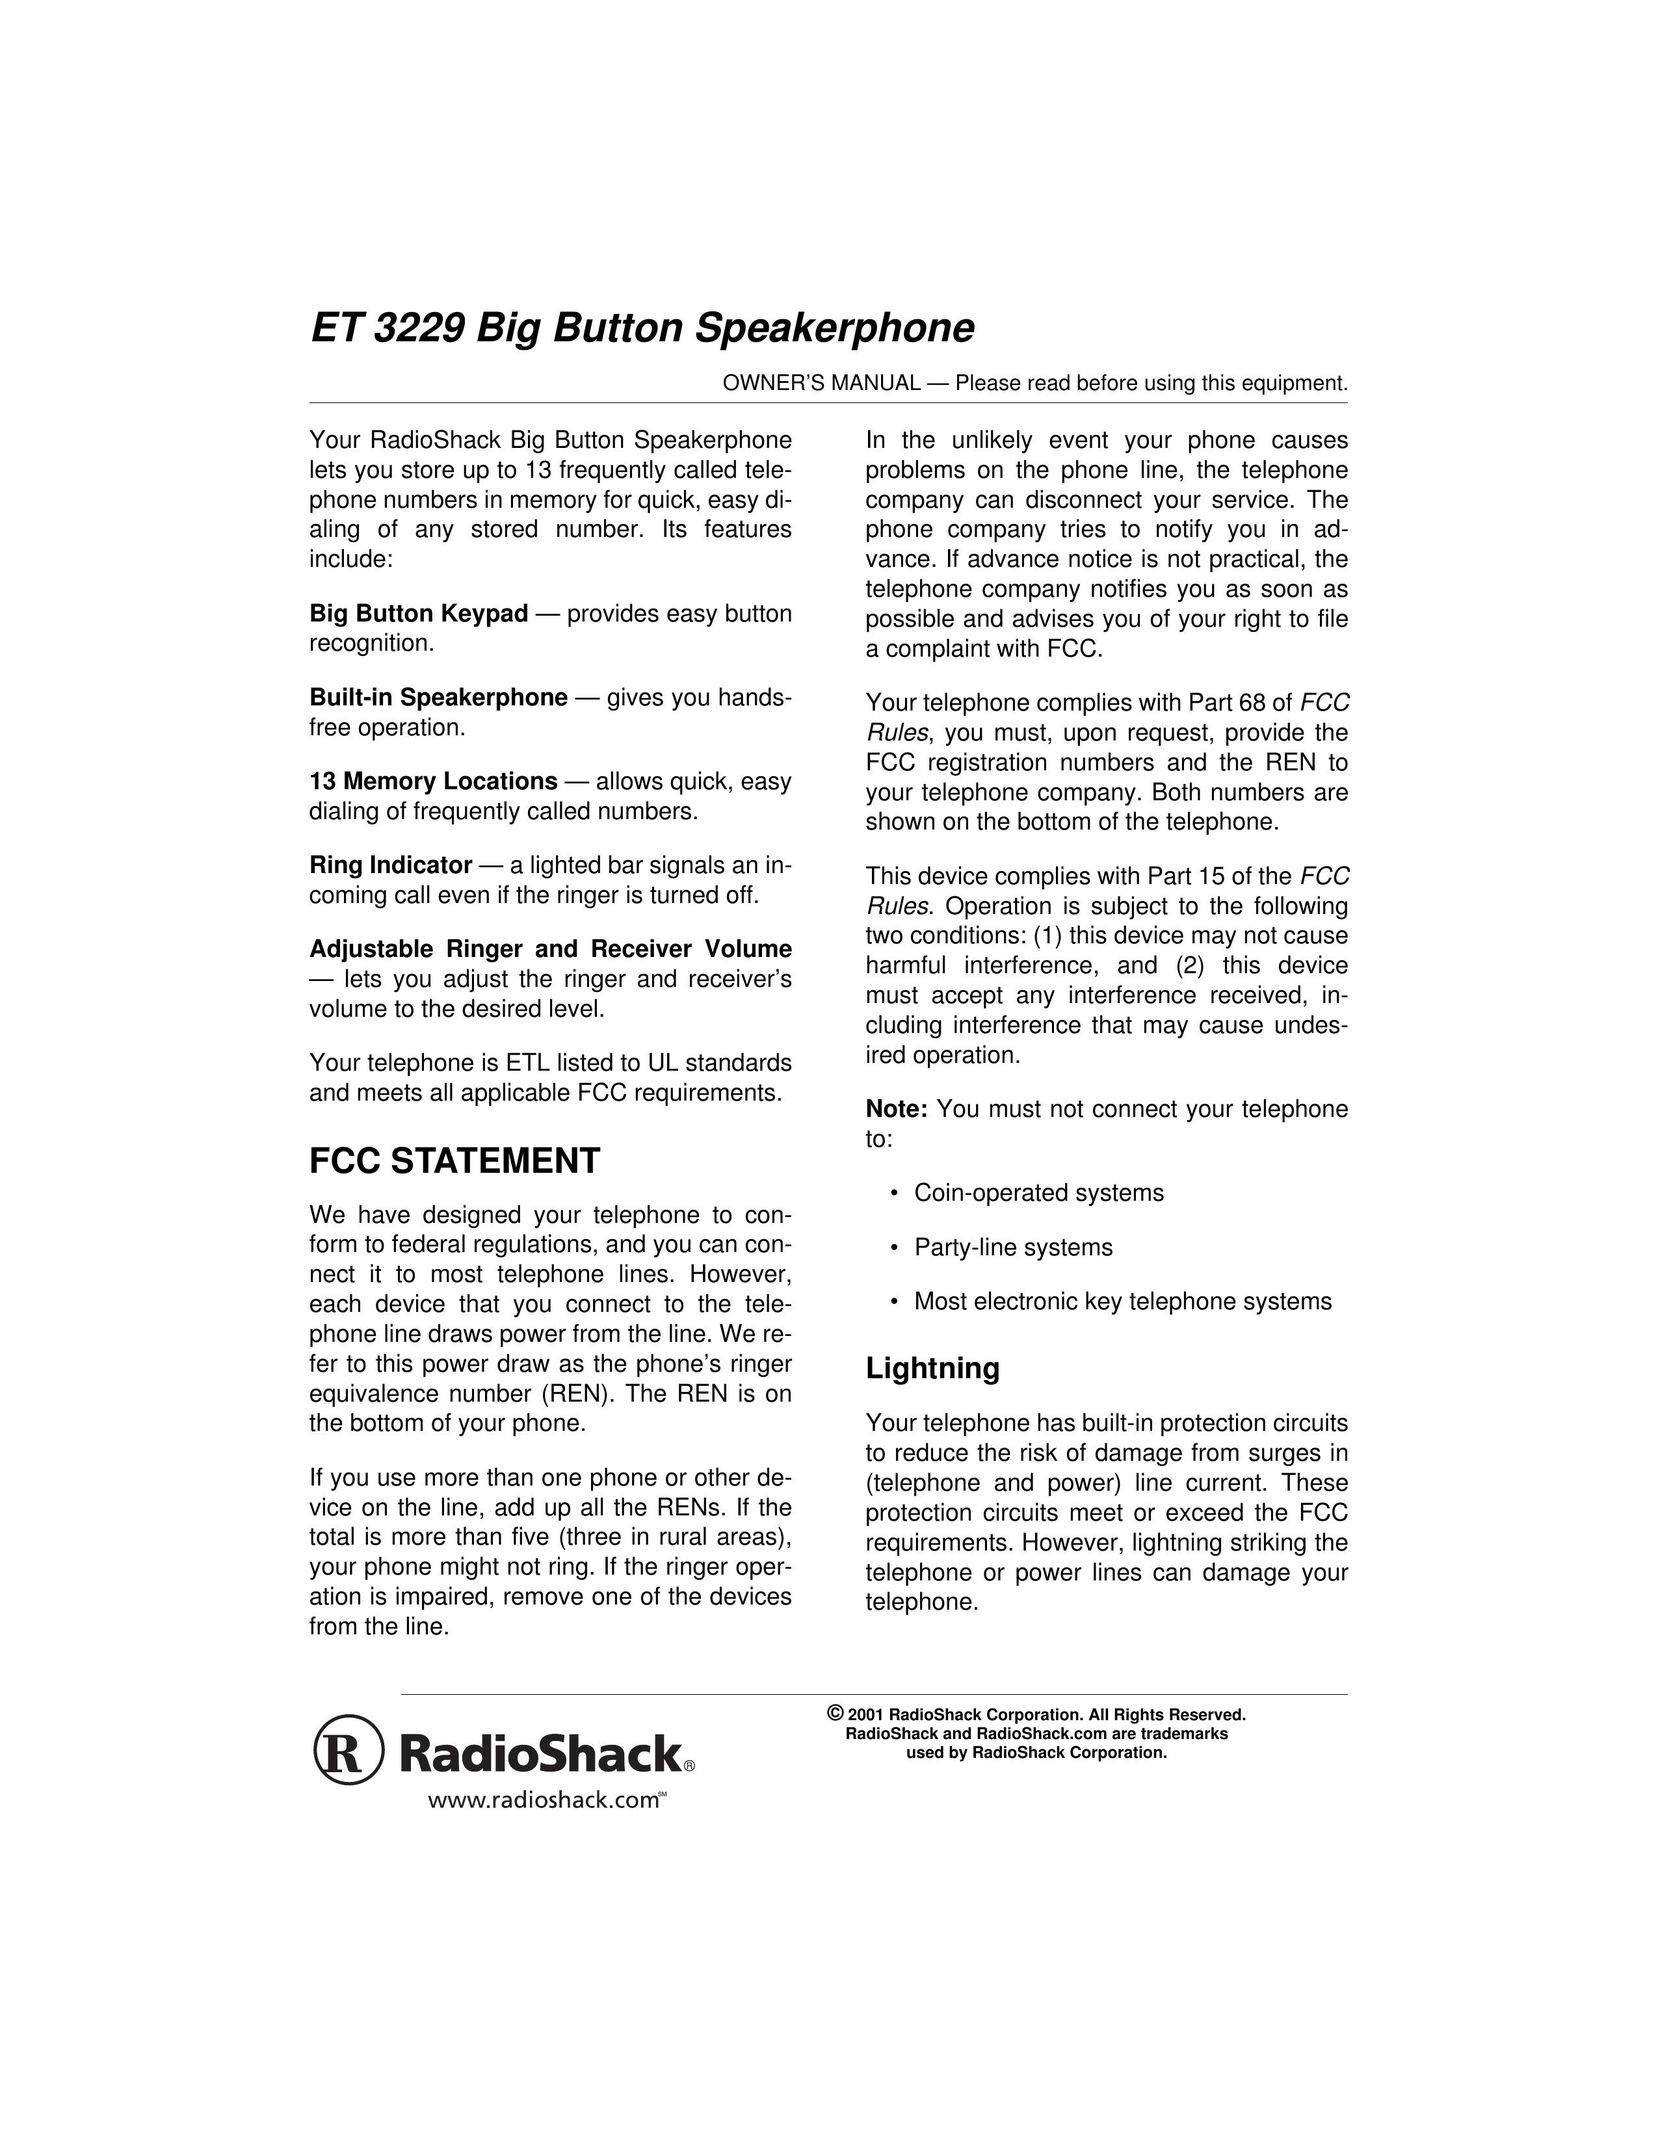 Radio Shack ET 3229 Conference Phone User Manual